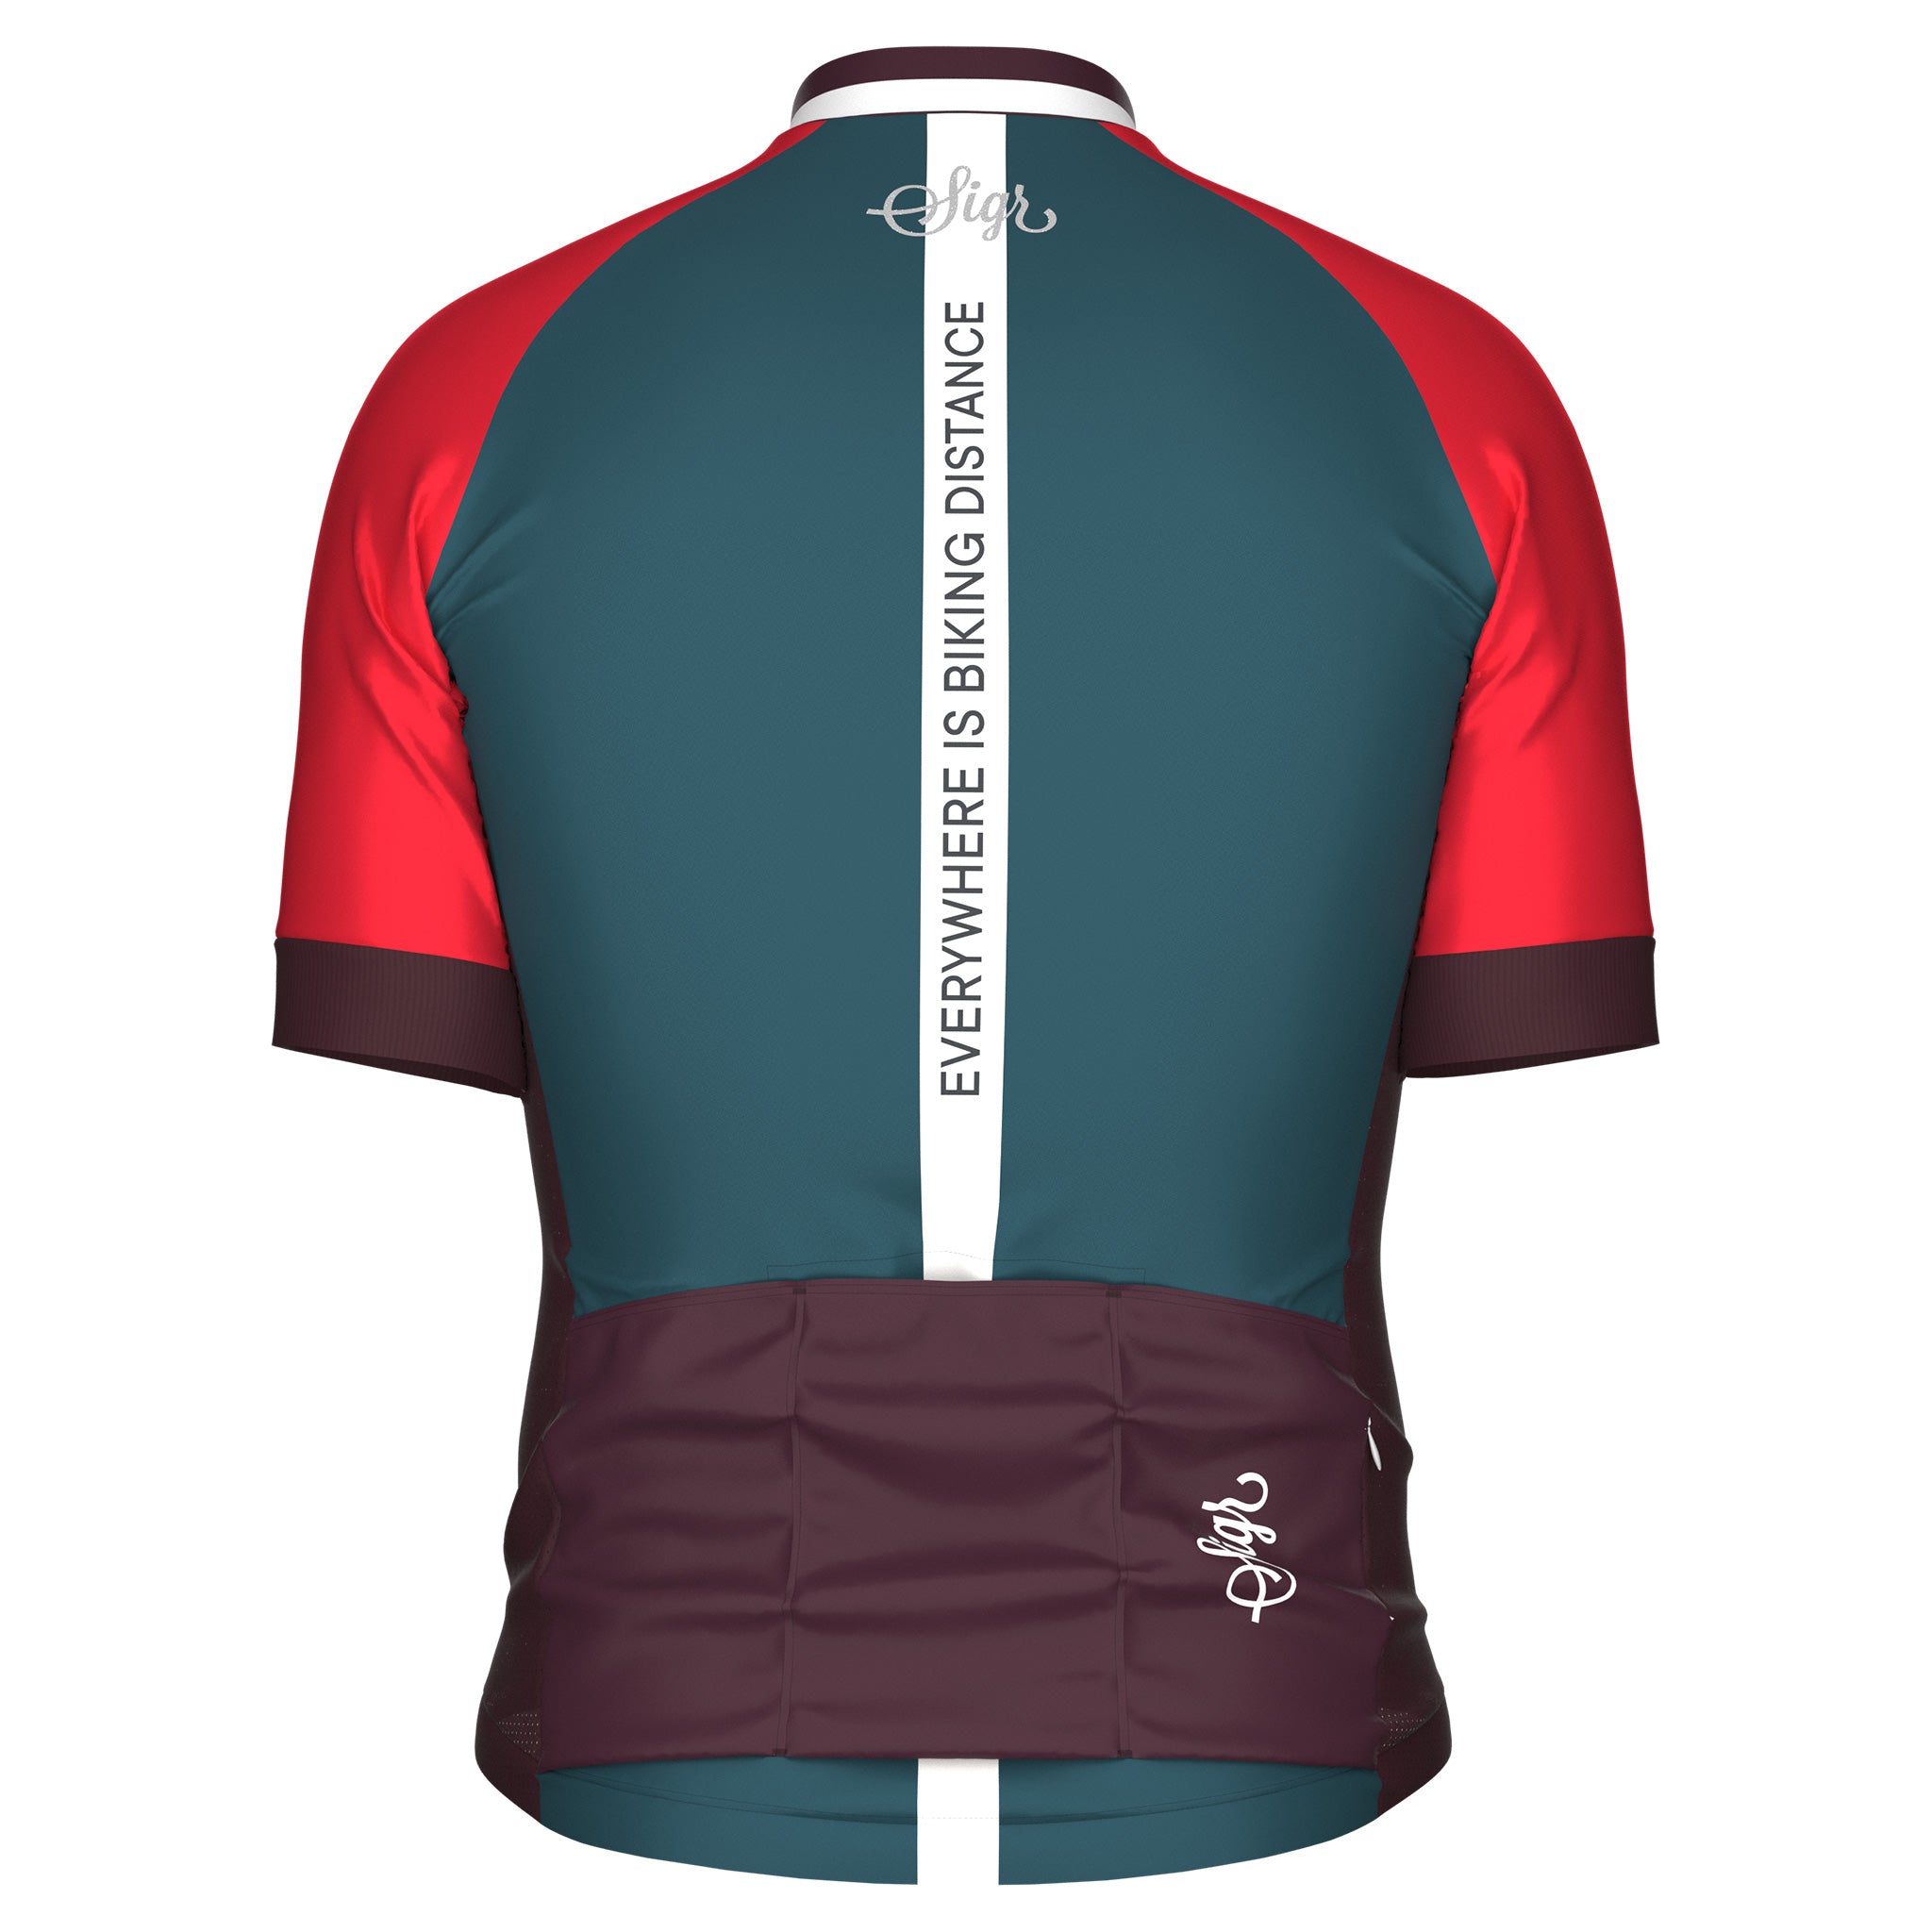 Team Sigr Climb - Road Cycling Jersey for Men